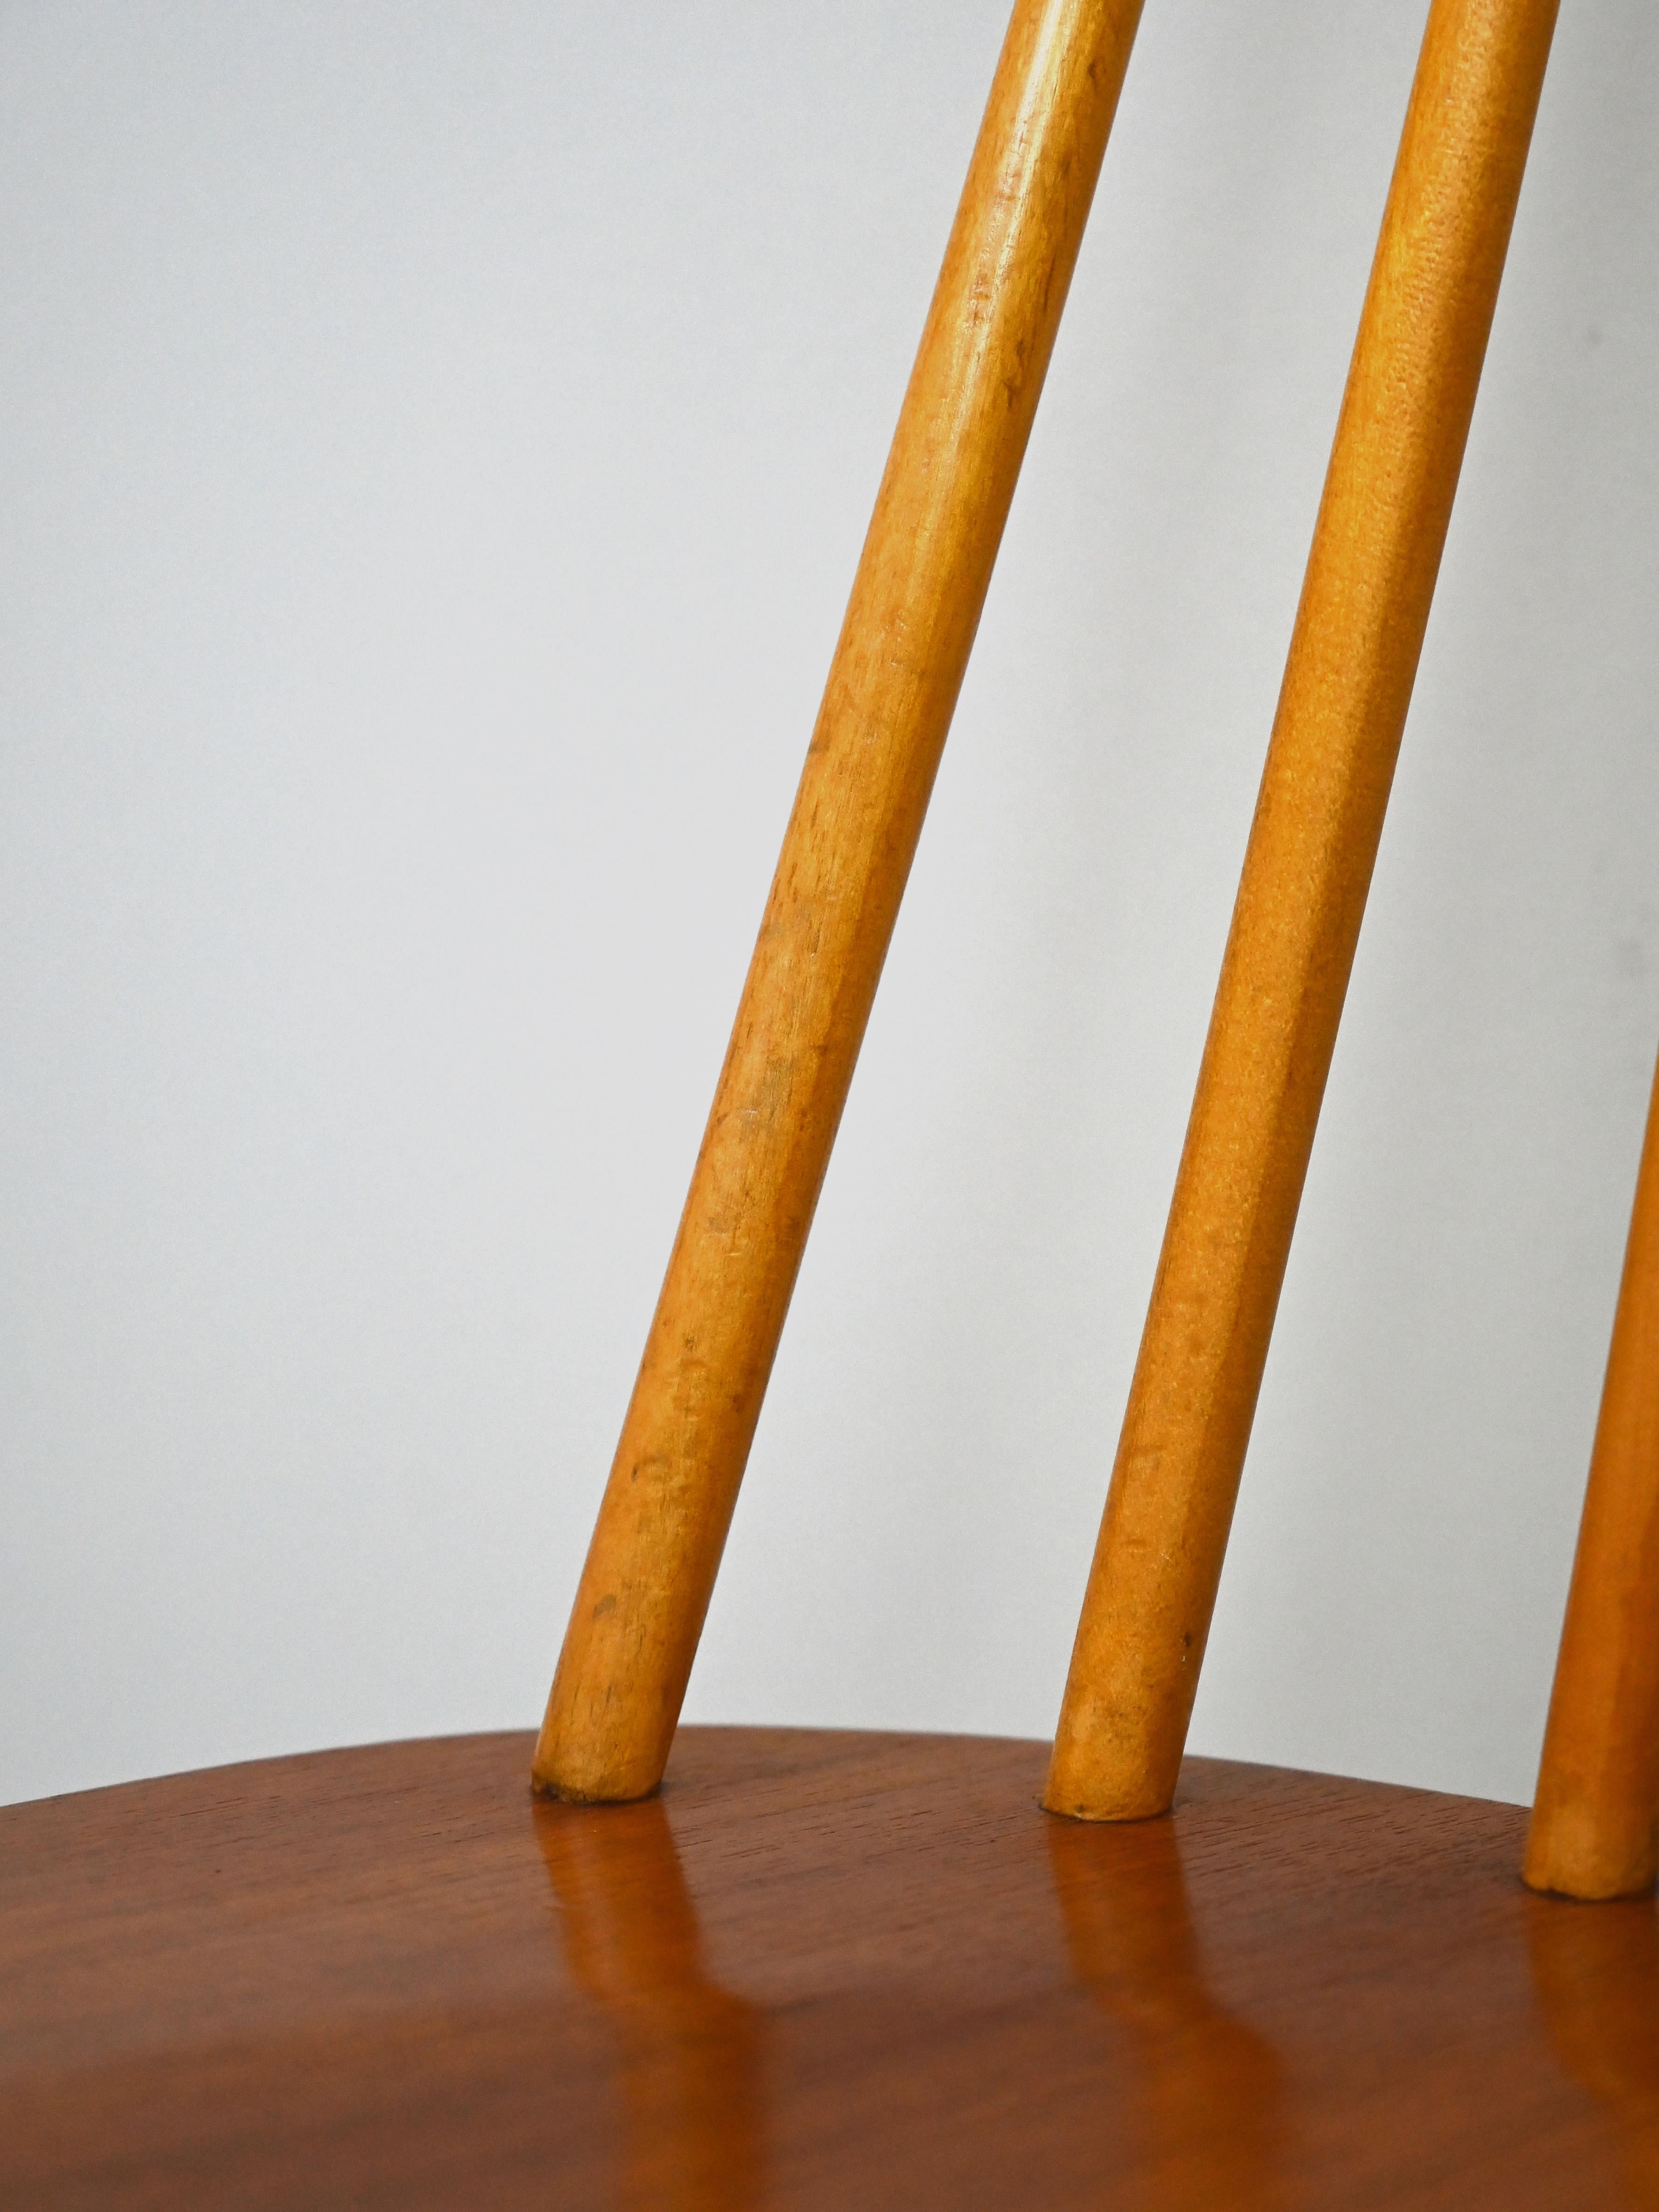 Mid-20th Century Set of Four 'Pinnstol' Chairs by Edsby Verken